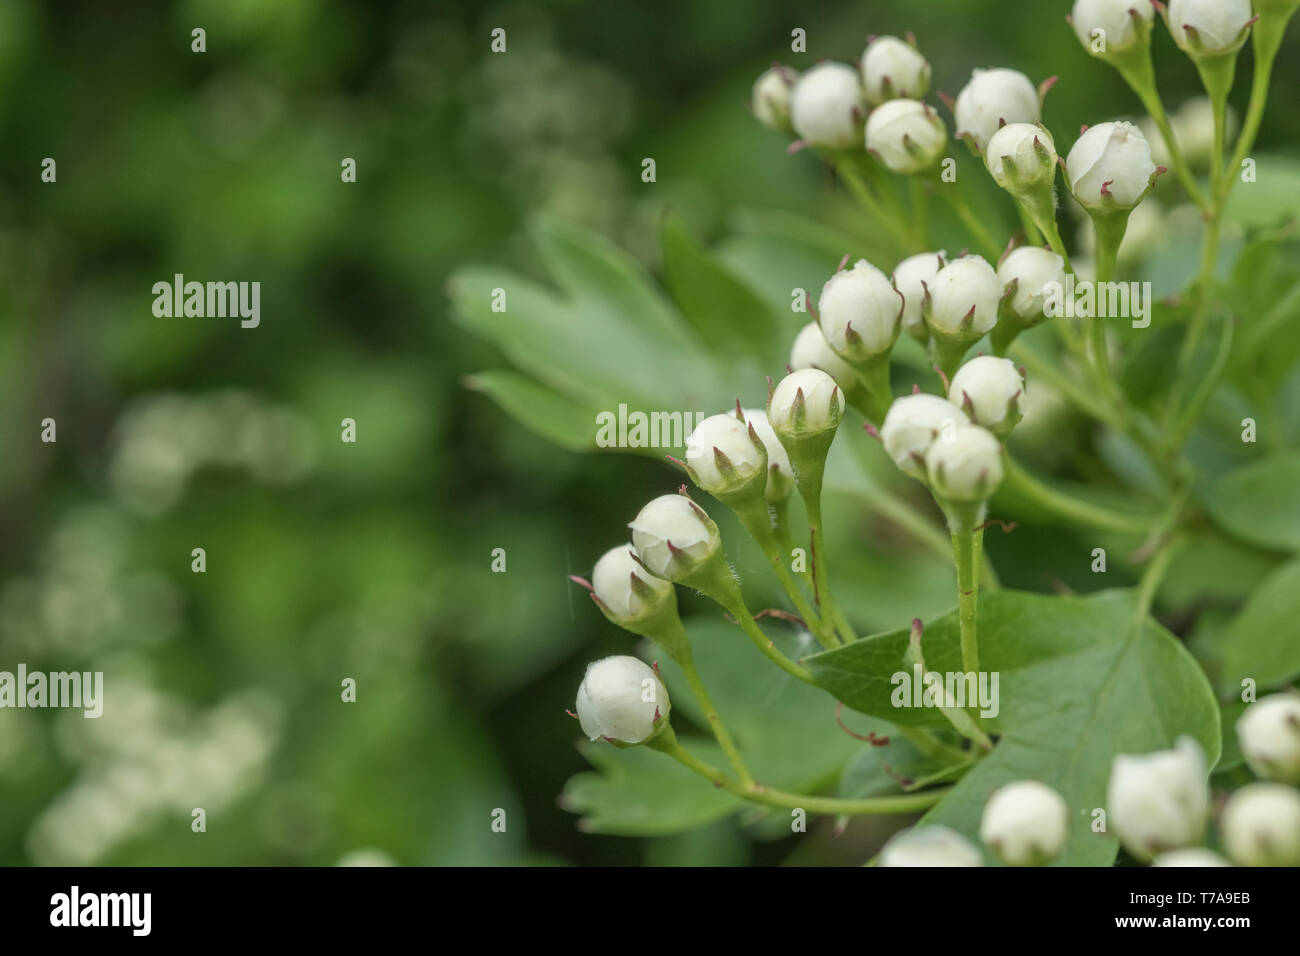 White flower buds of Common Hawthorn tree / Crataegus monogyna. May blossom, hedgerow blossom concept. Stock Photo